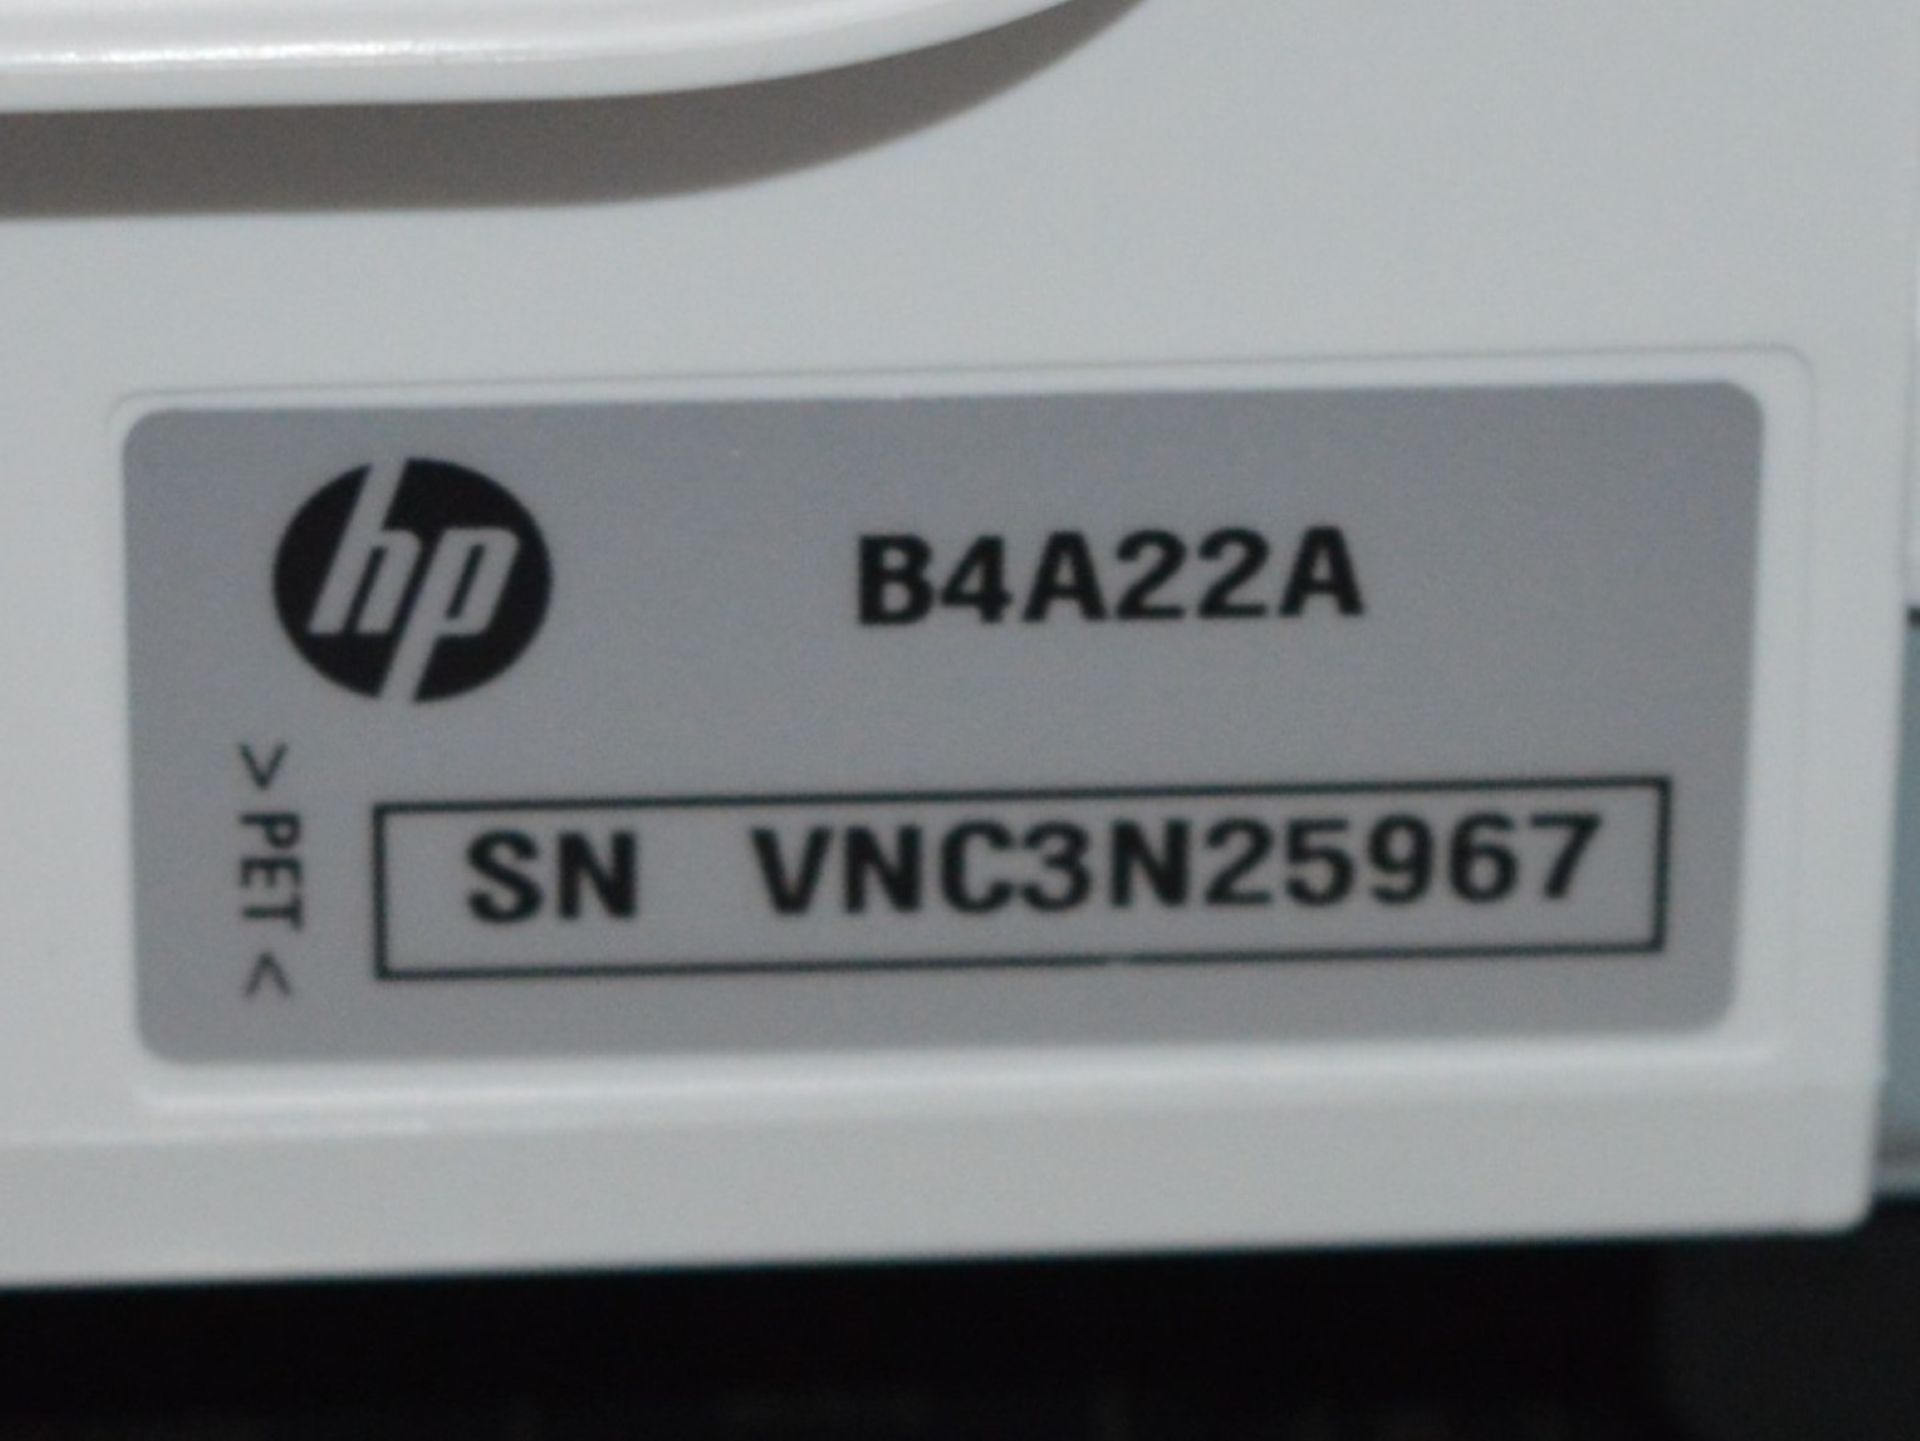 1 x HP LaserJet Pro M252dw Colour Laser Printer - CL010 - Ref IT467 - Includes Full Set of - Image 9 of 11